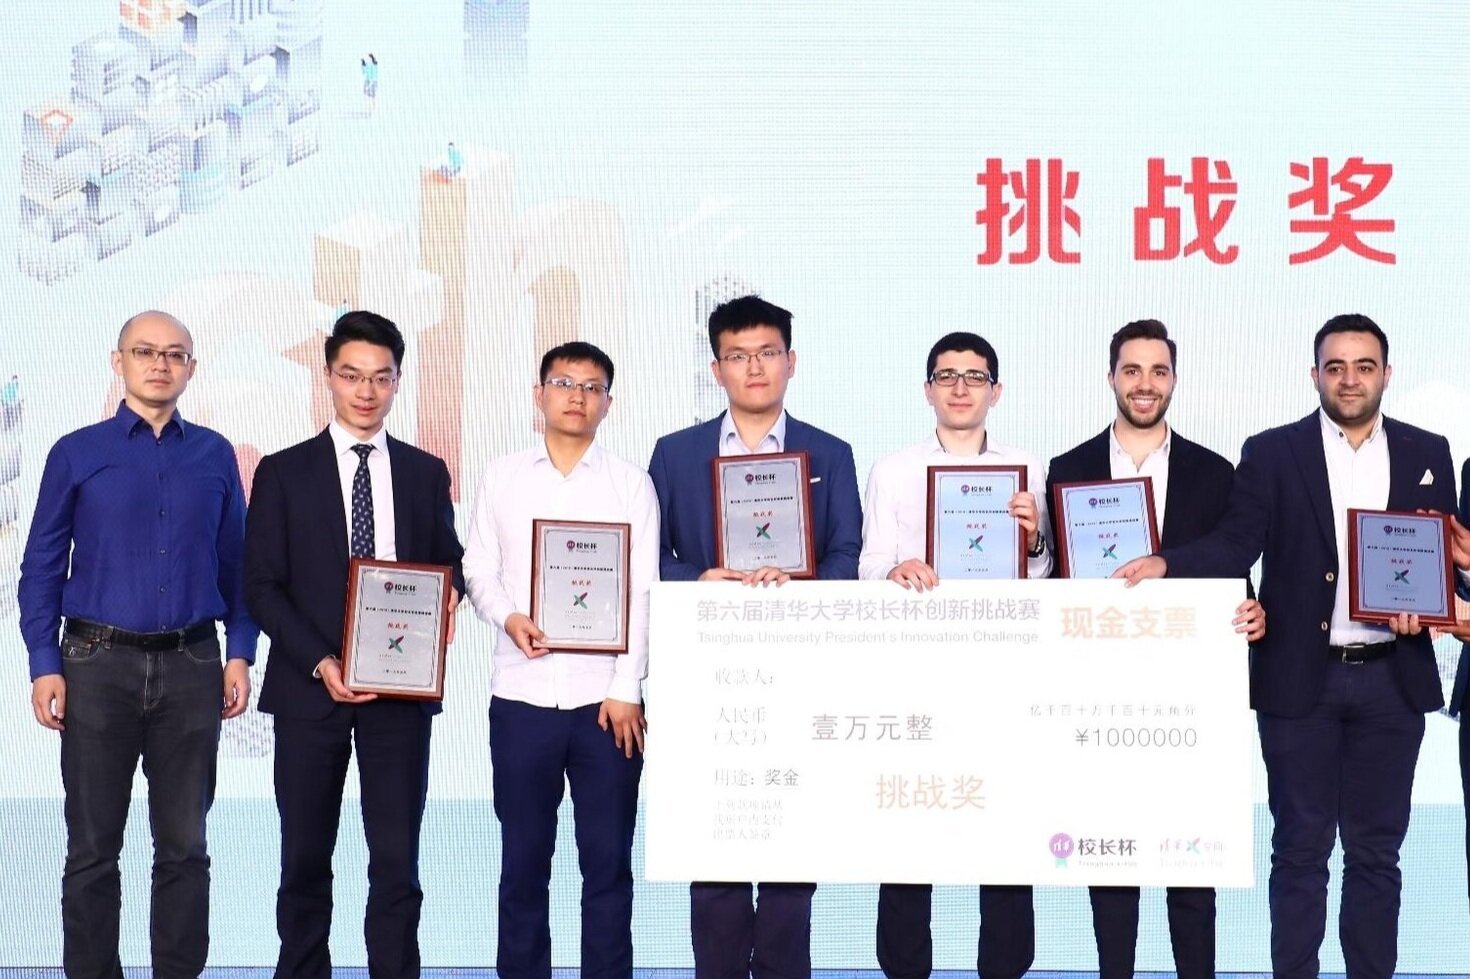 President's Award Competition, Tsinghua University, China